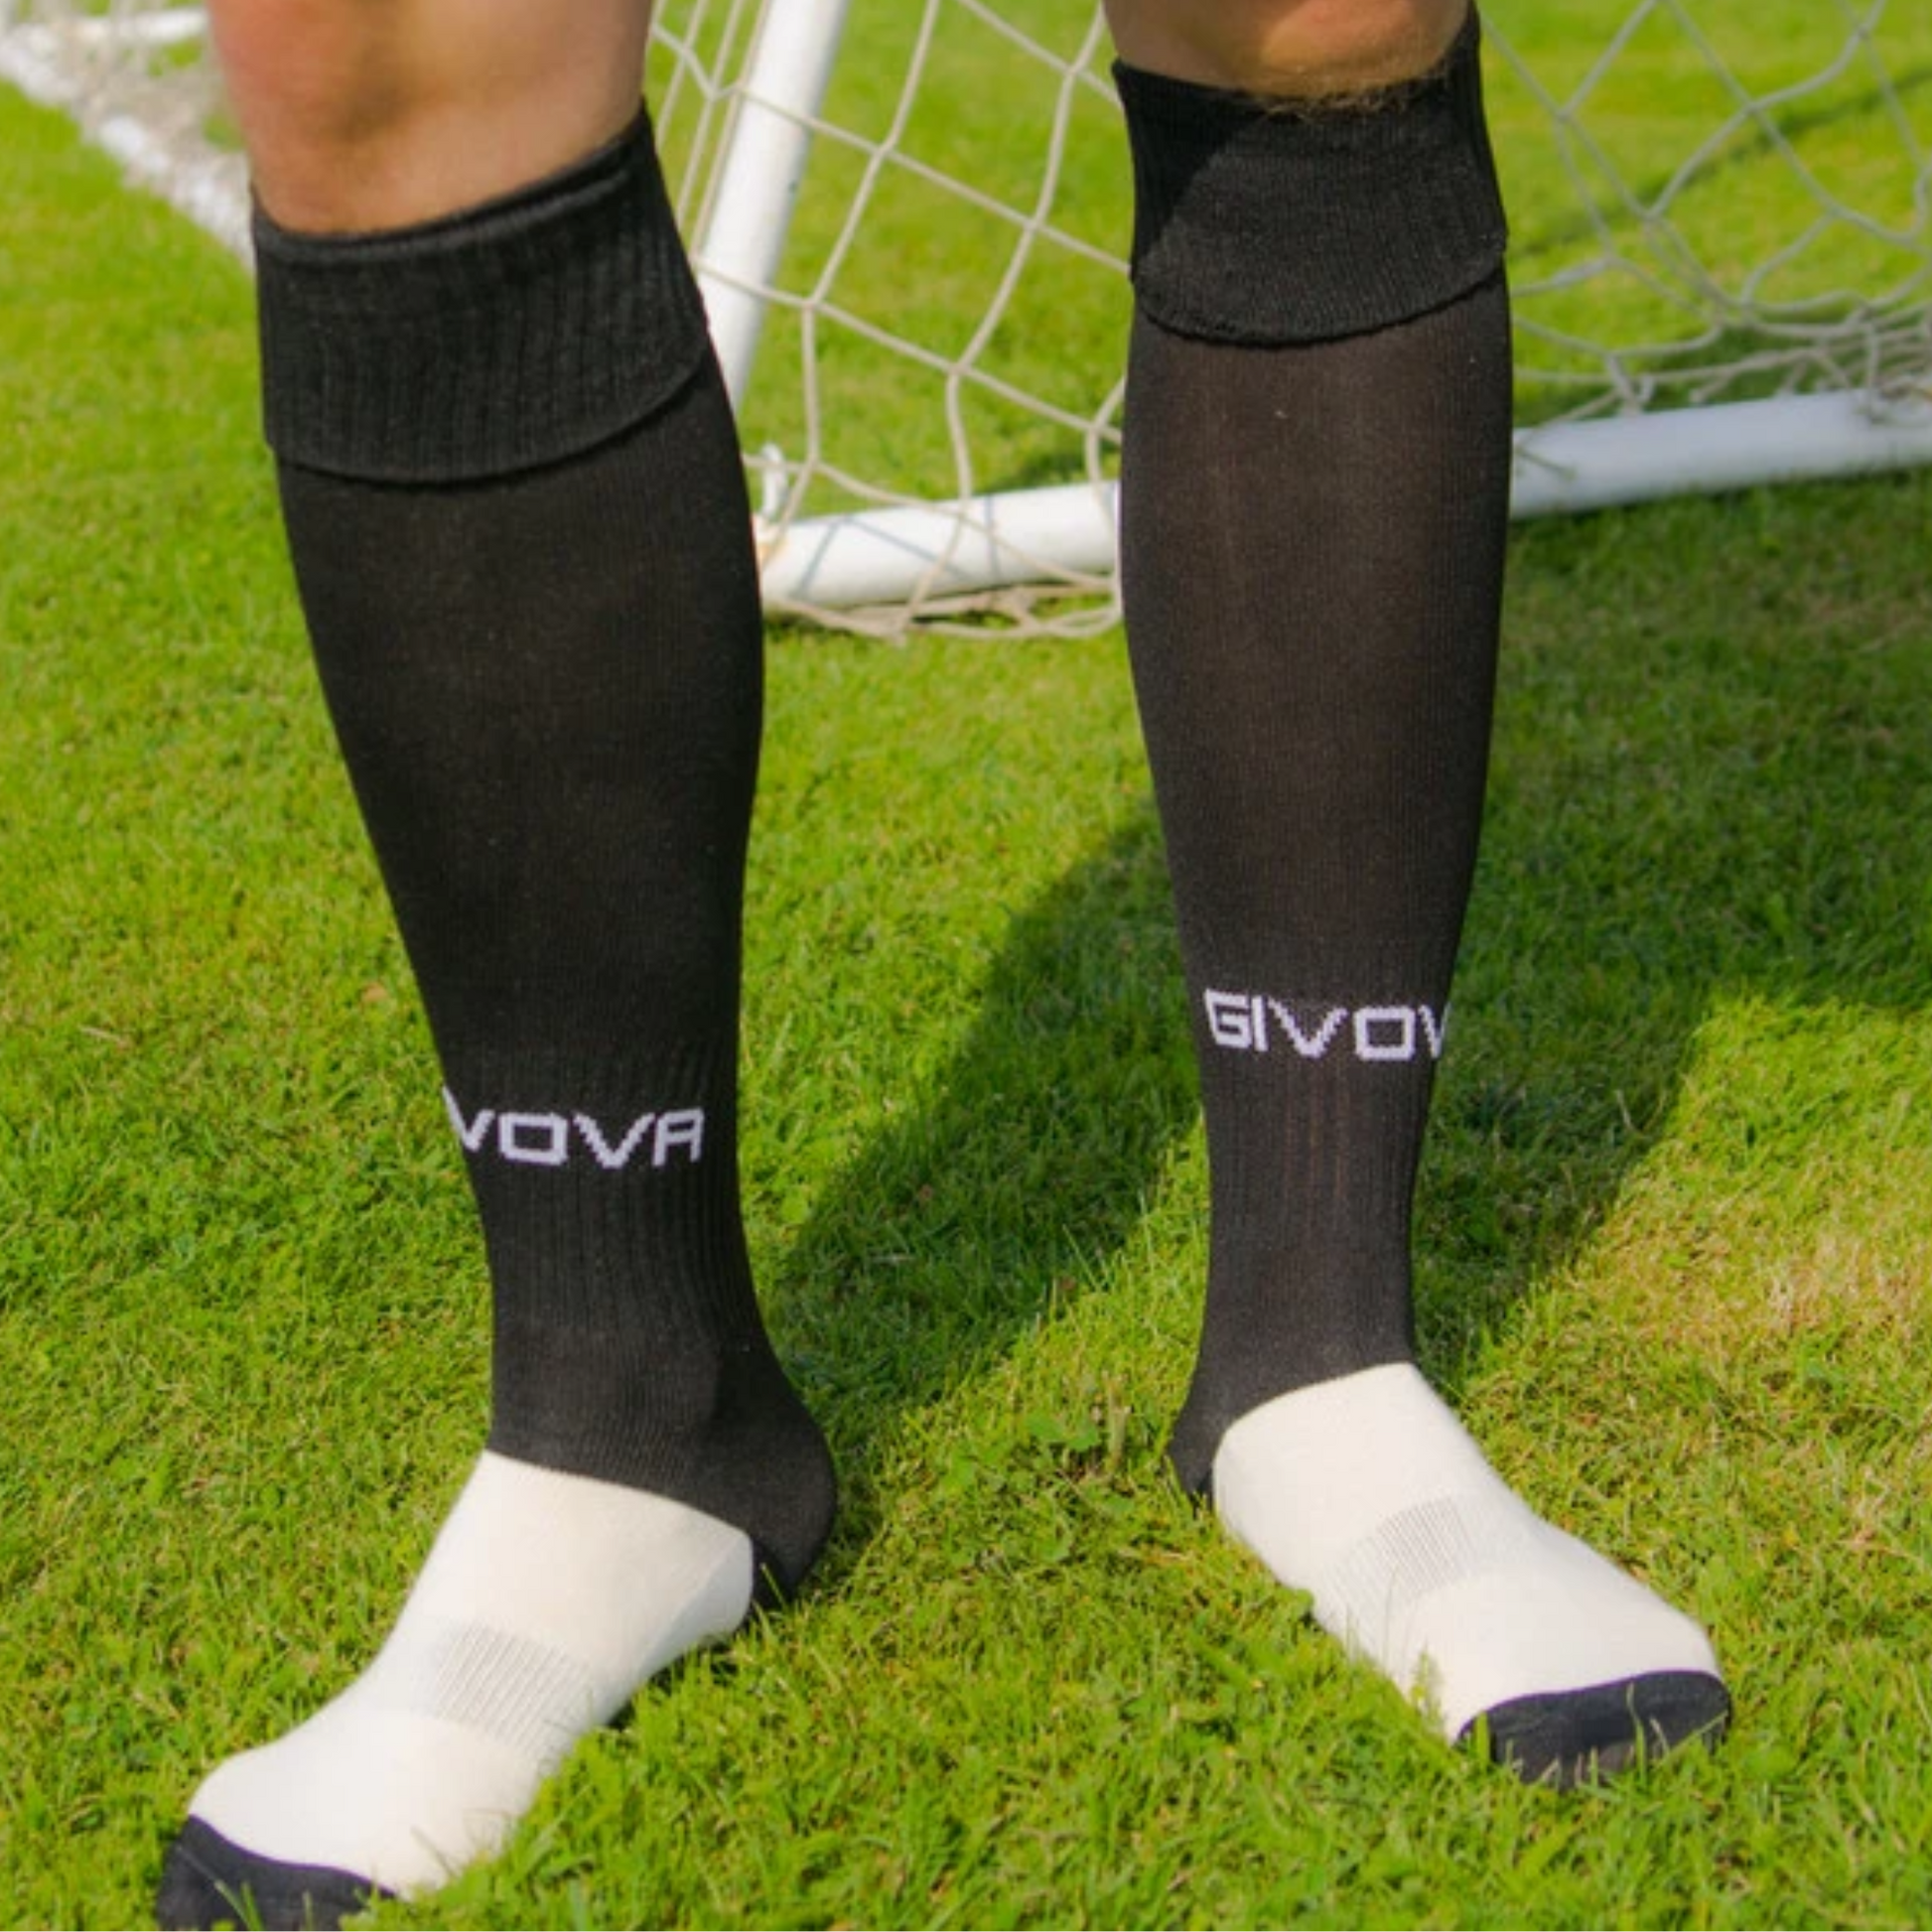 Givova Football Socks Itasport